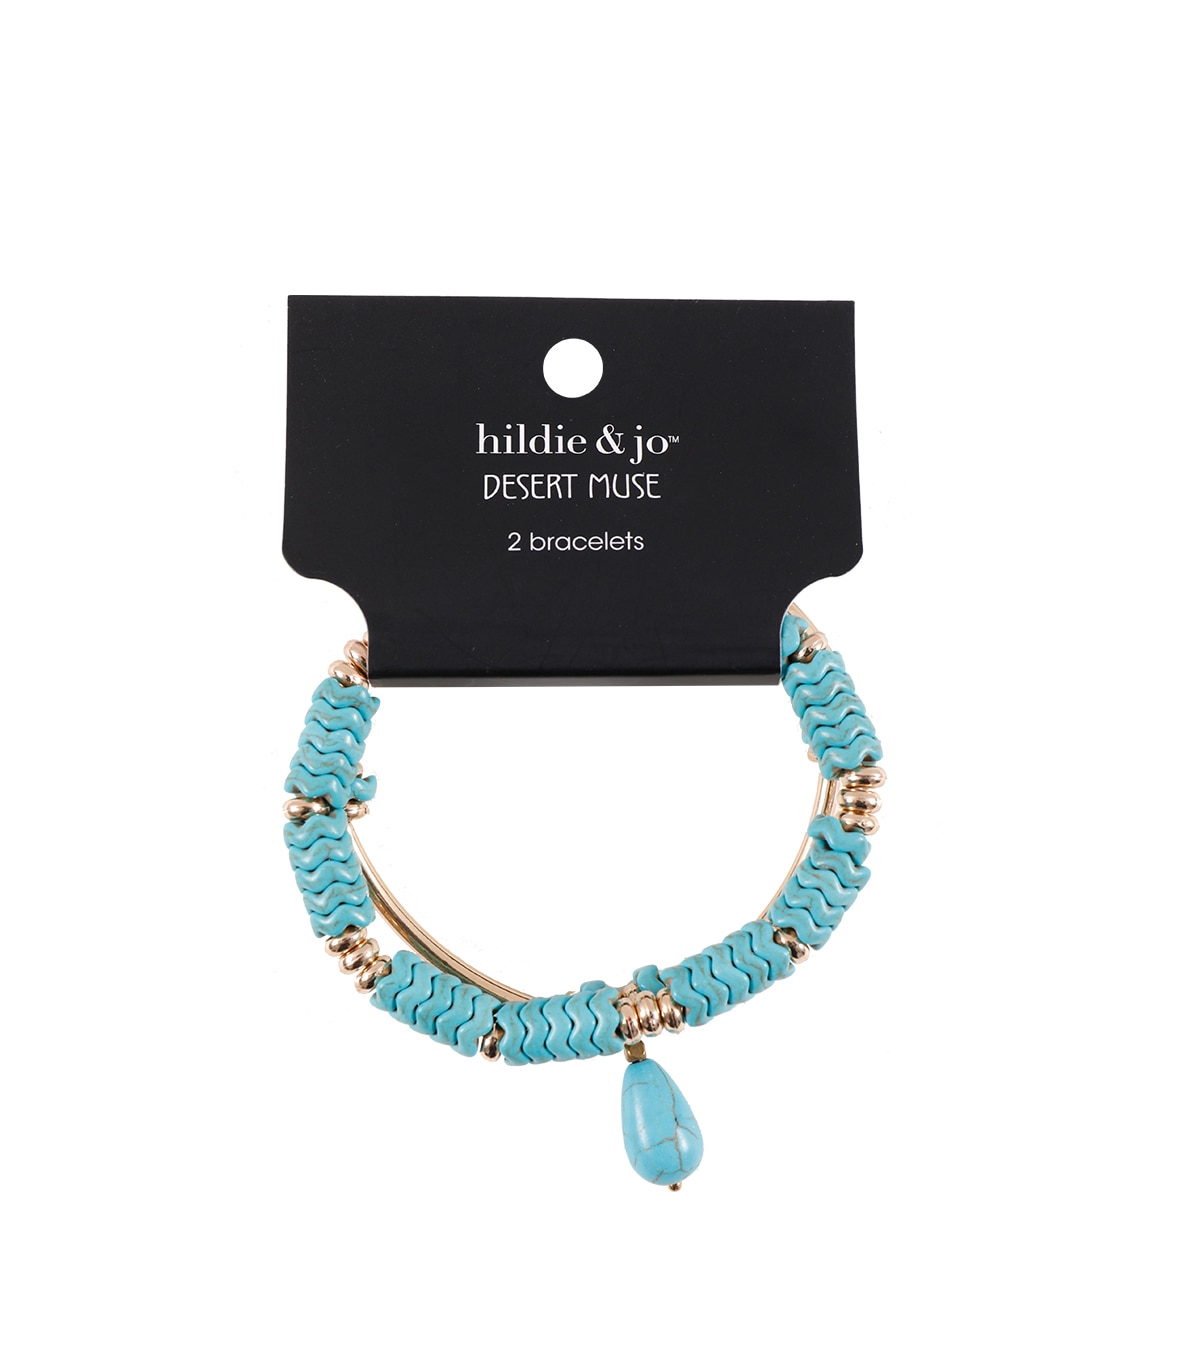 hildie & jo Desert Muse 2 pk Stretch Bracelets Turquoise ...